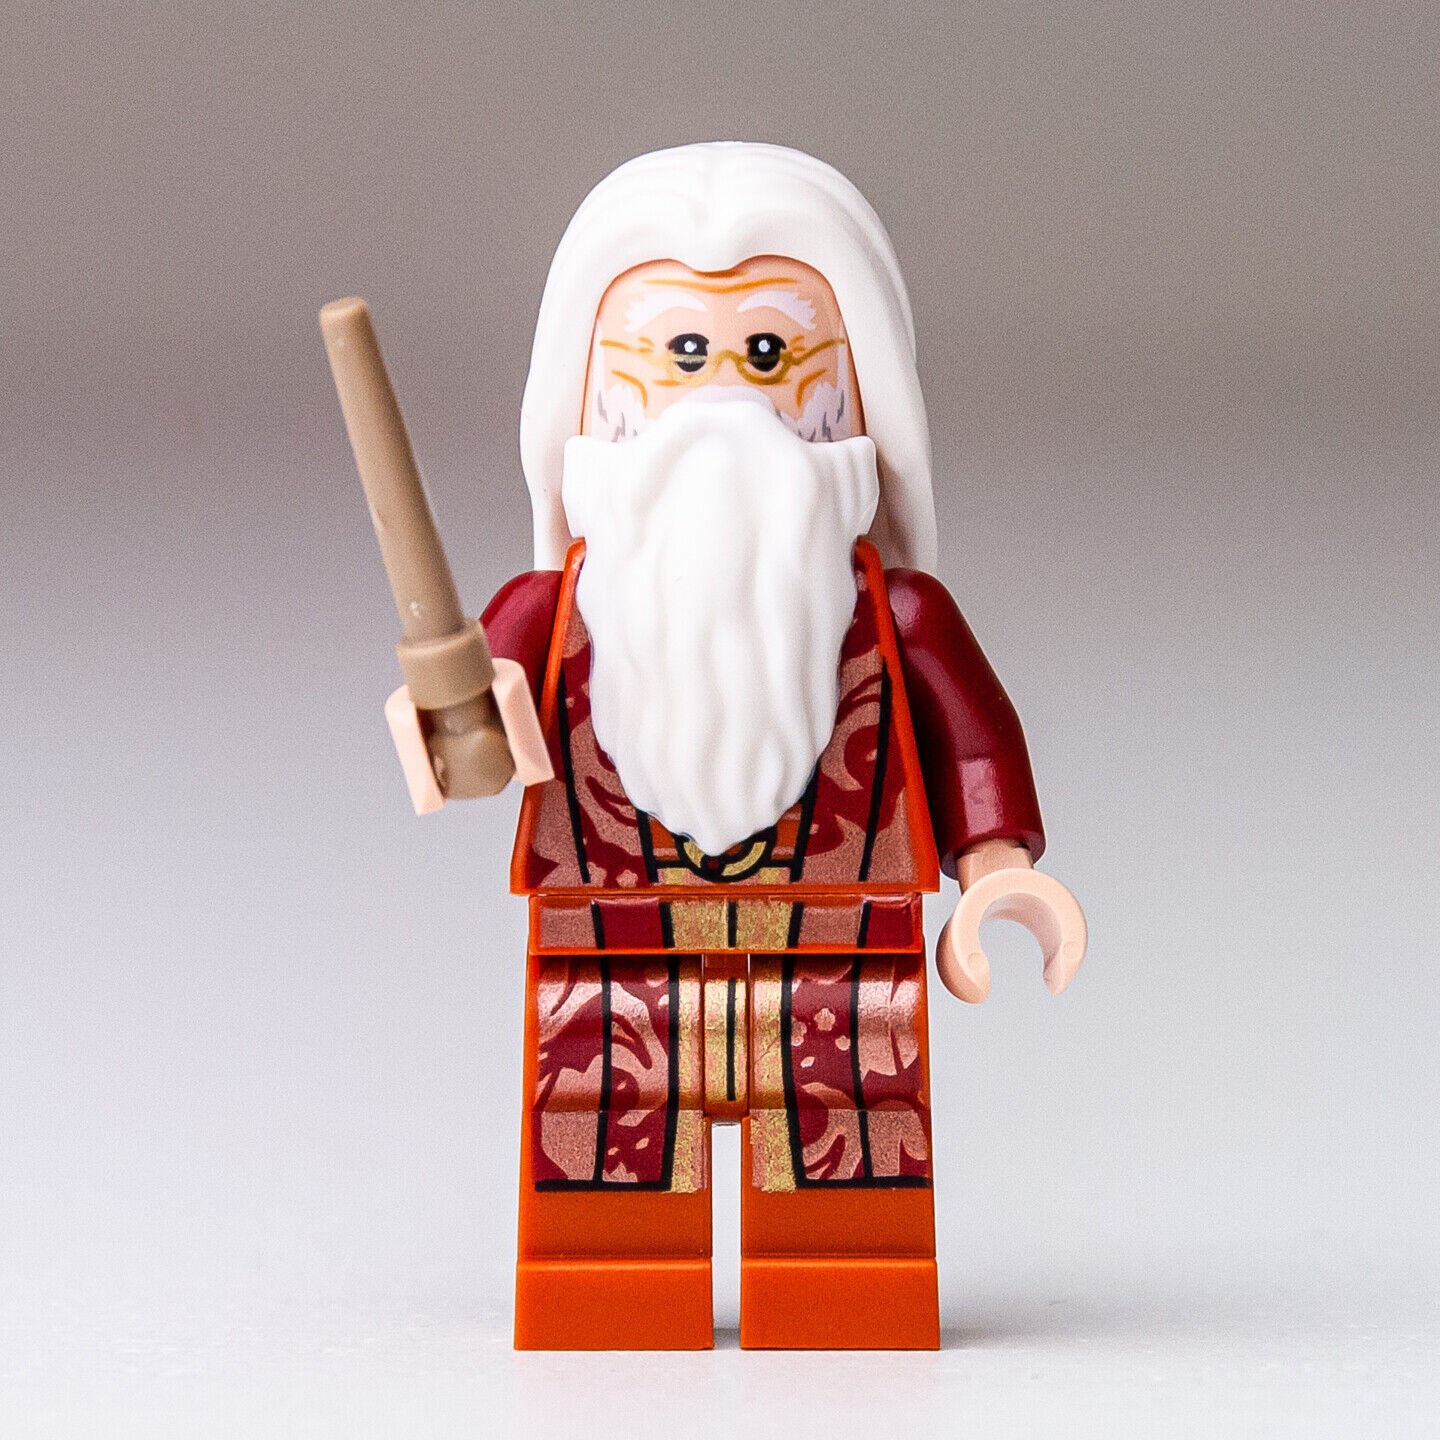 New LEGO Albus Dumbledore Minifigure - Fawkes, Dumbledore’s Phoenix - hp313